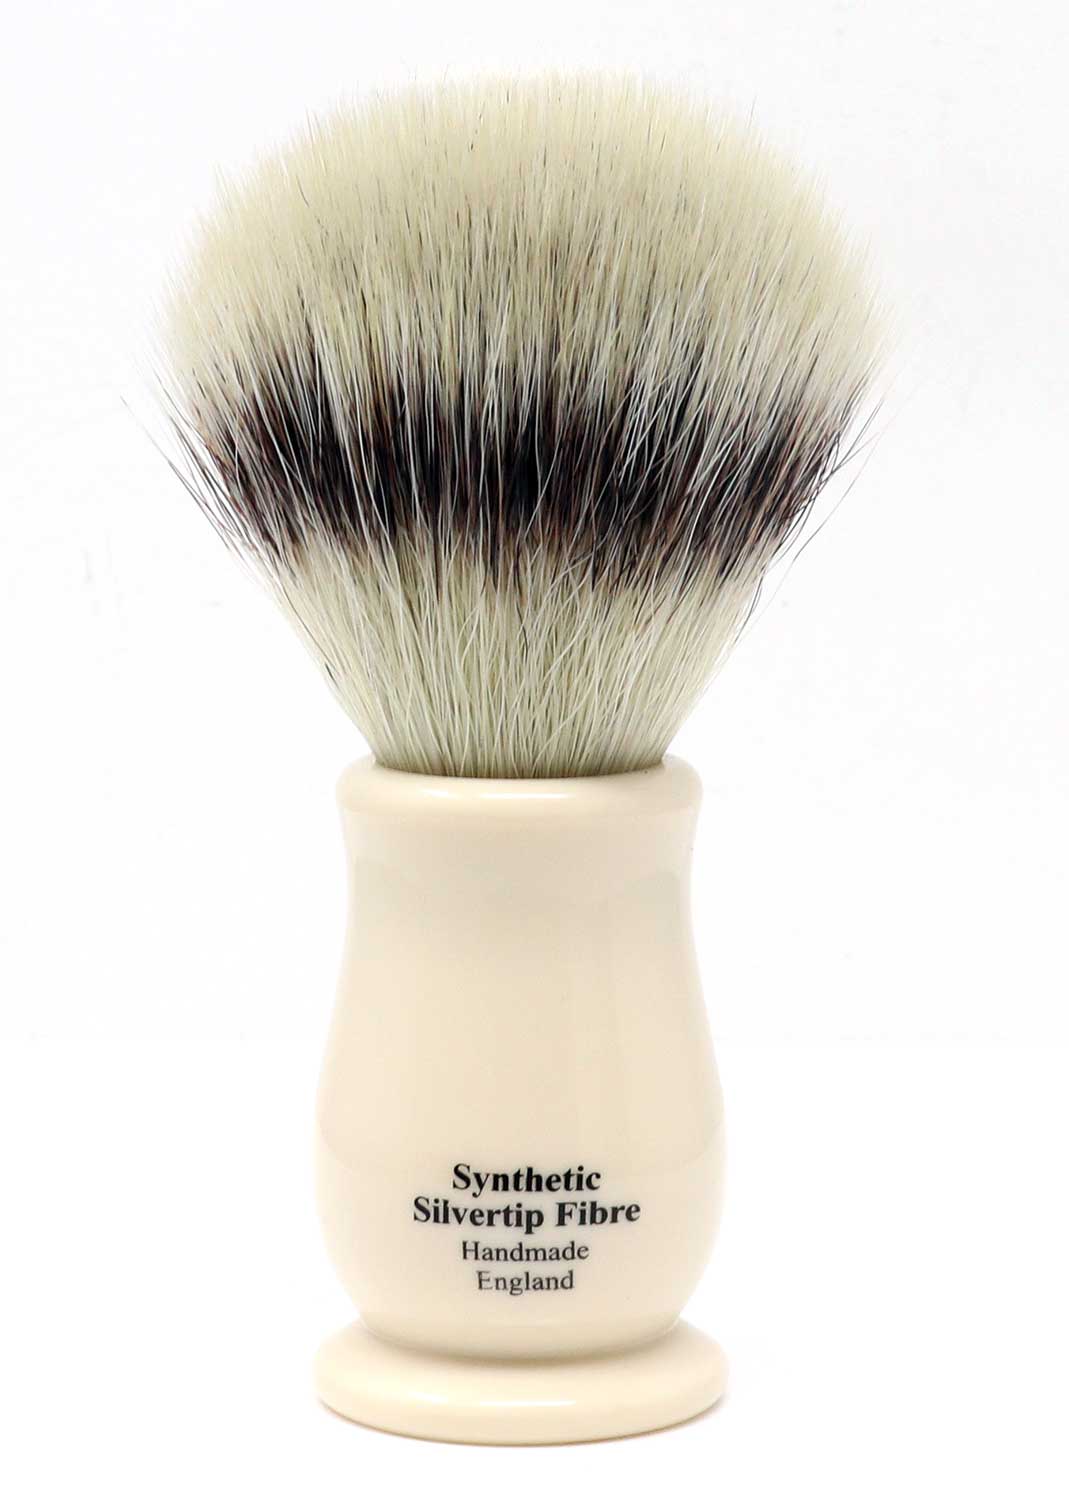 Edwin Jagger Chatsworth Imitation Ivory Synthetic Silver Tip Shaving Brush